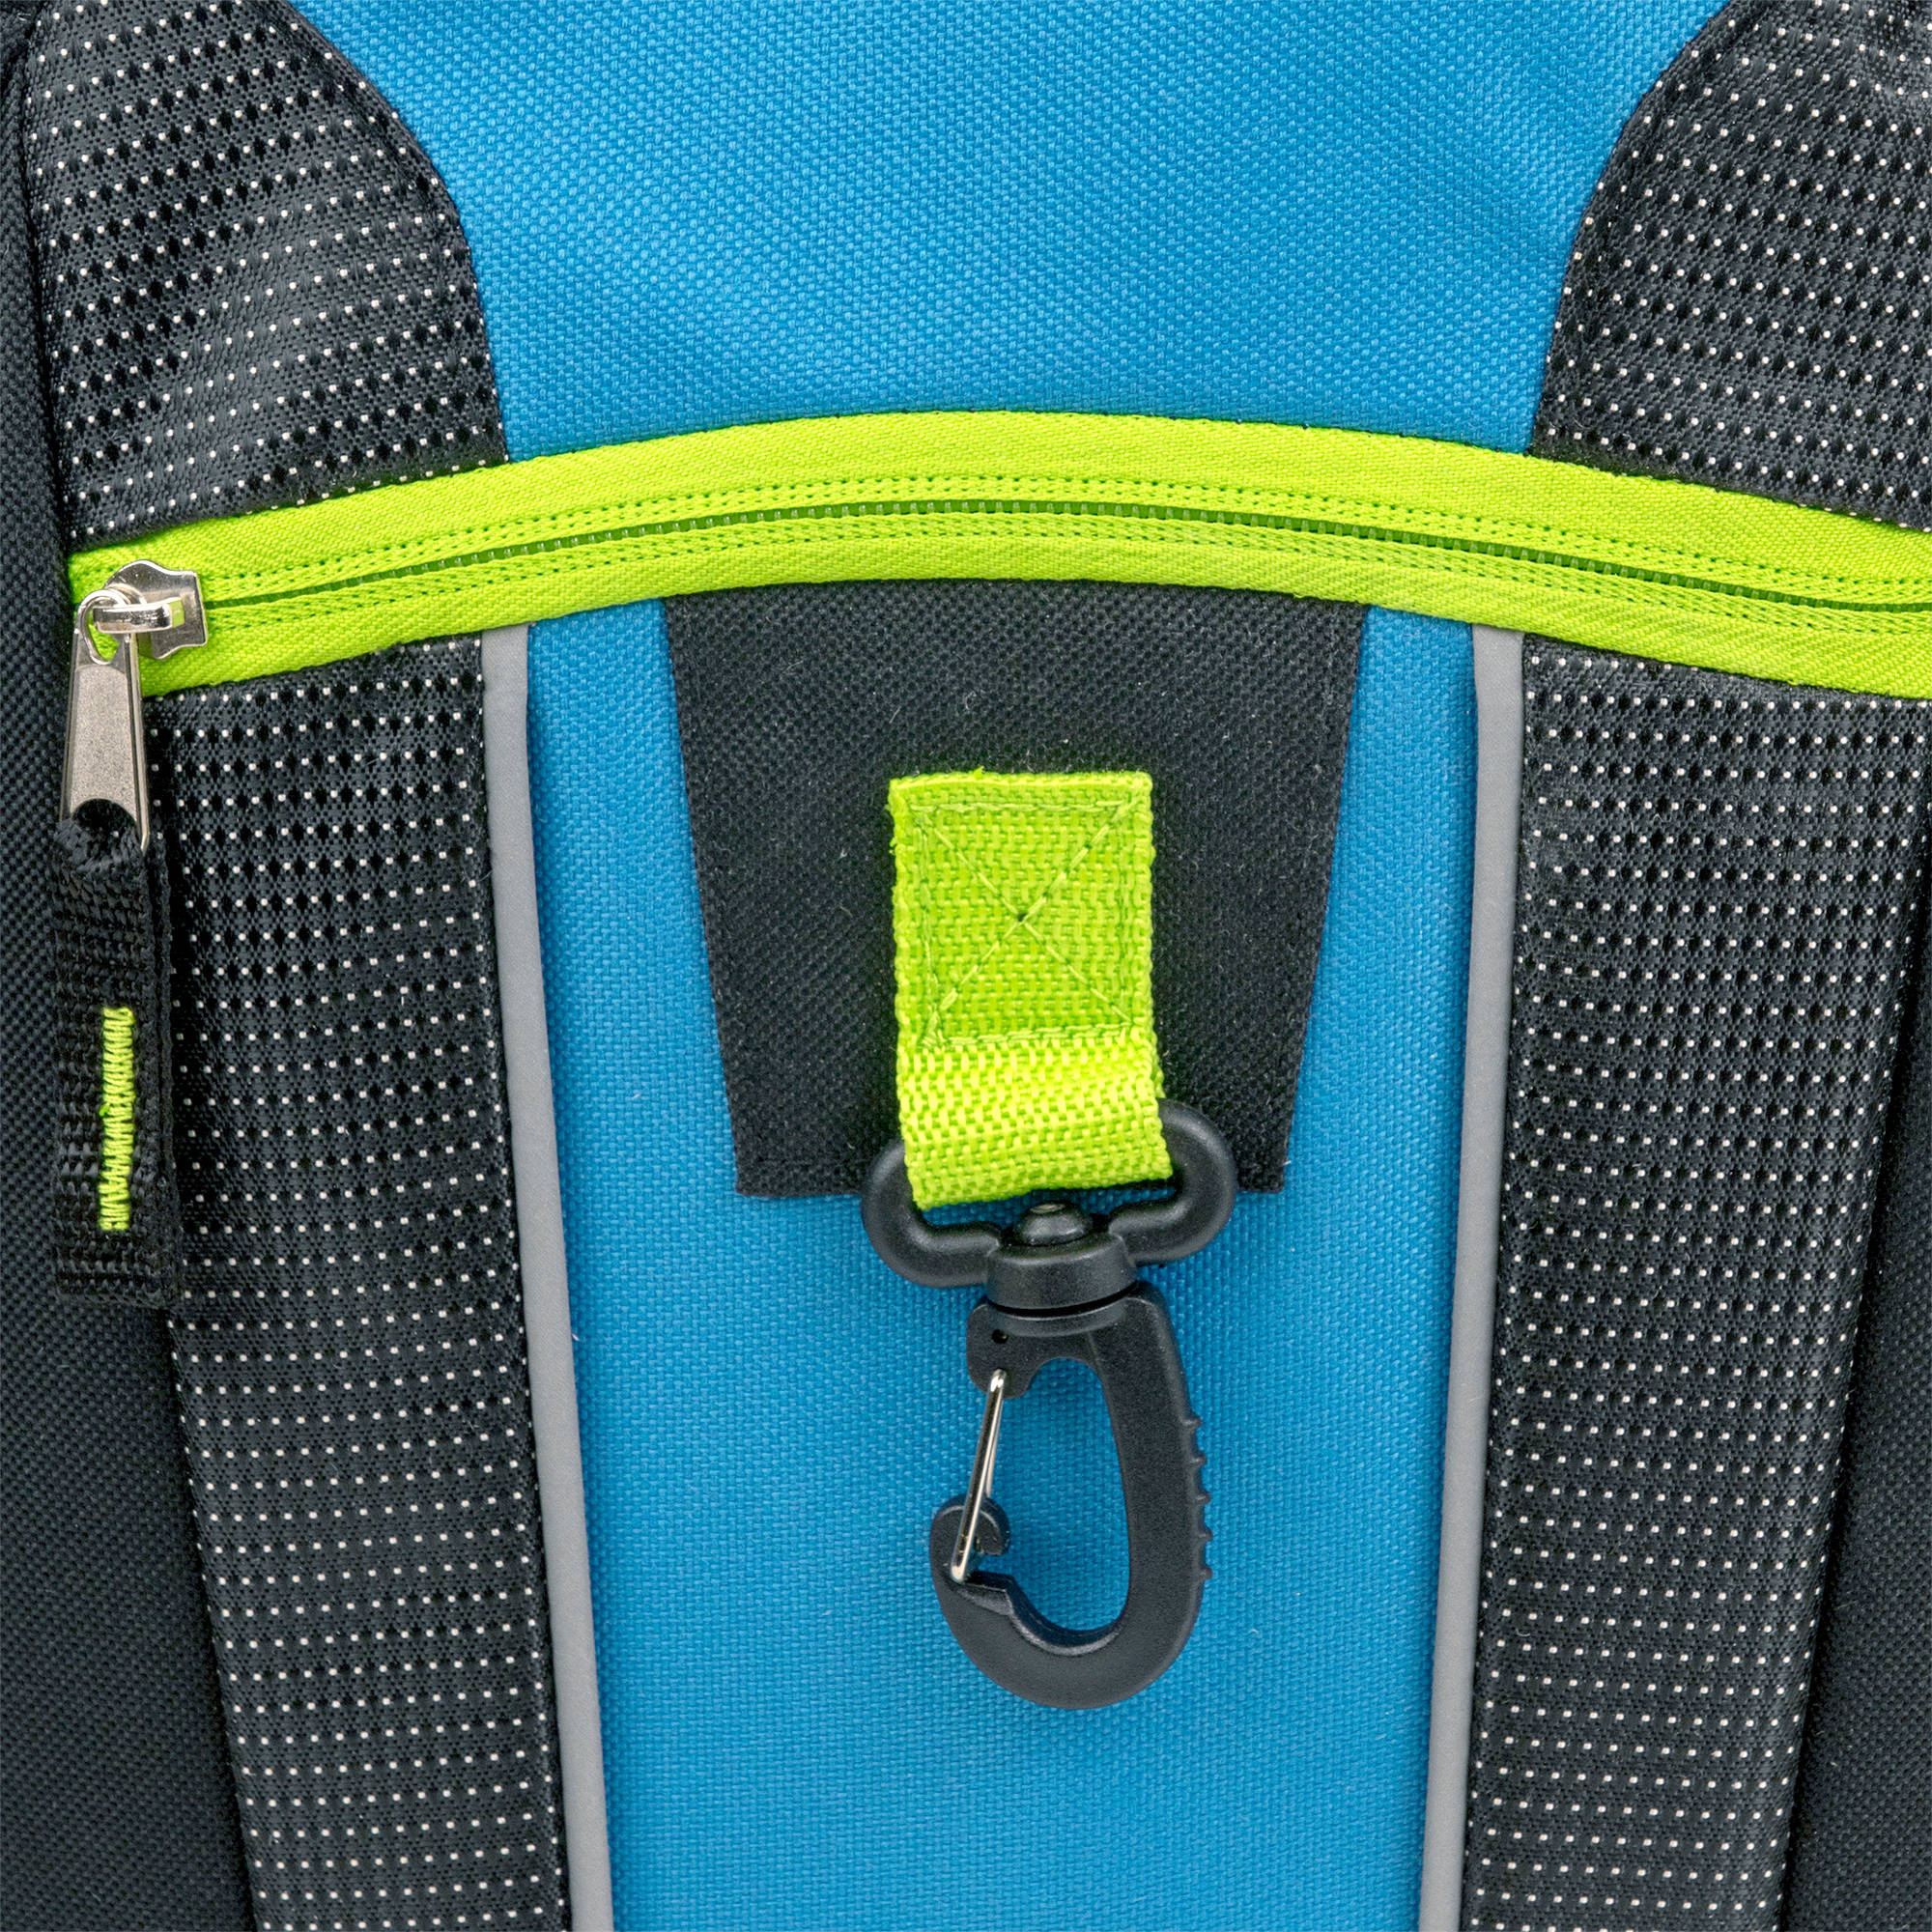 17 Inch Carabineer Backpack - image 4 of 4